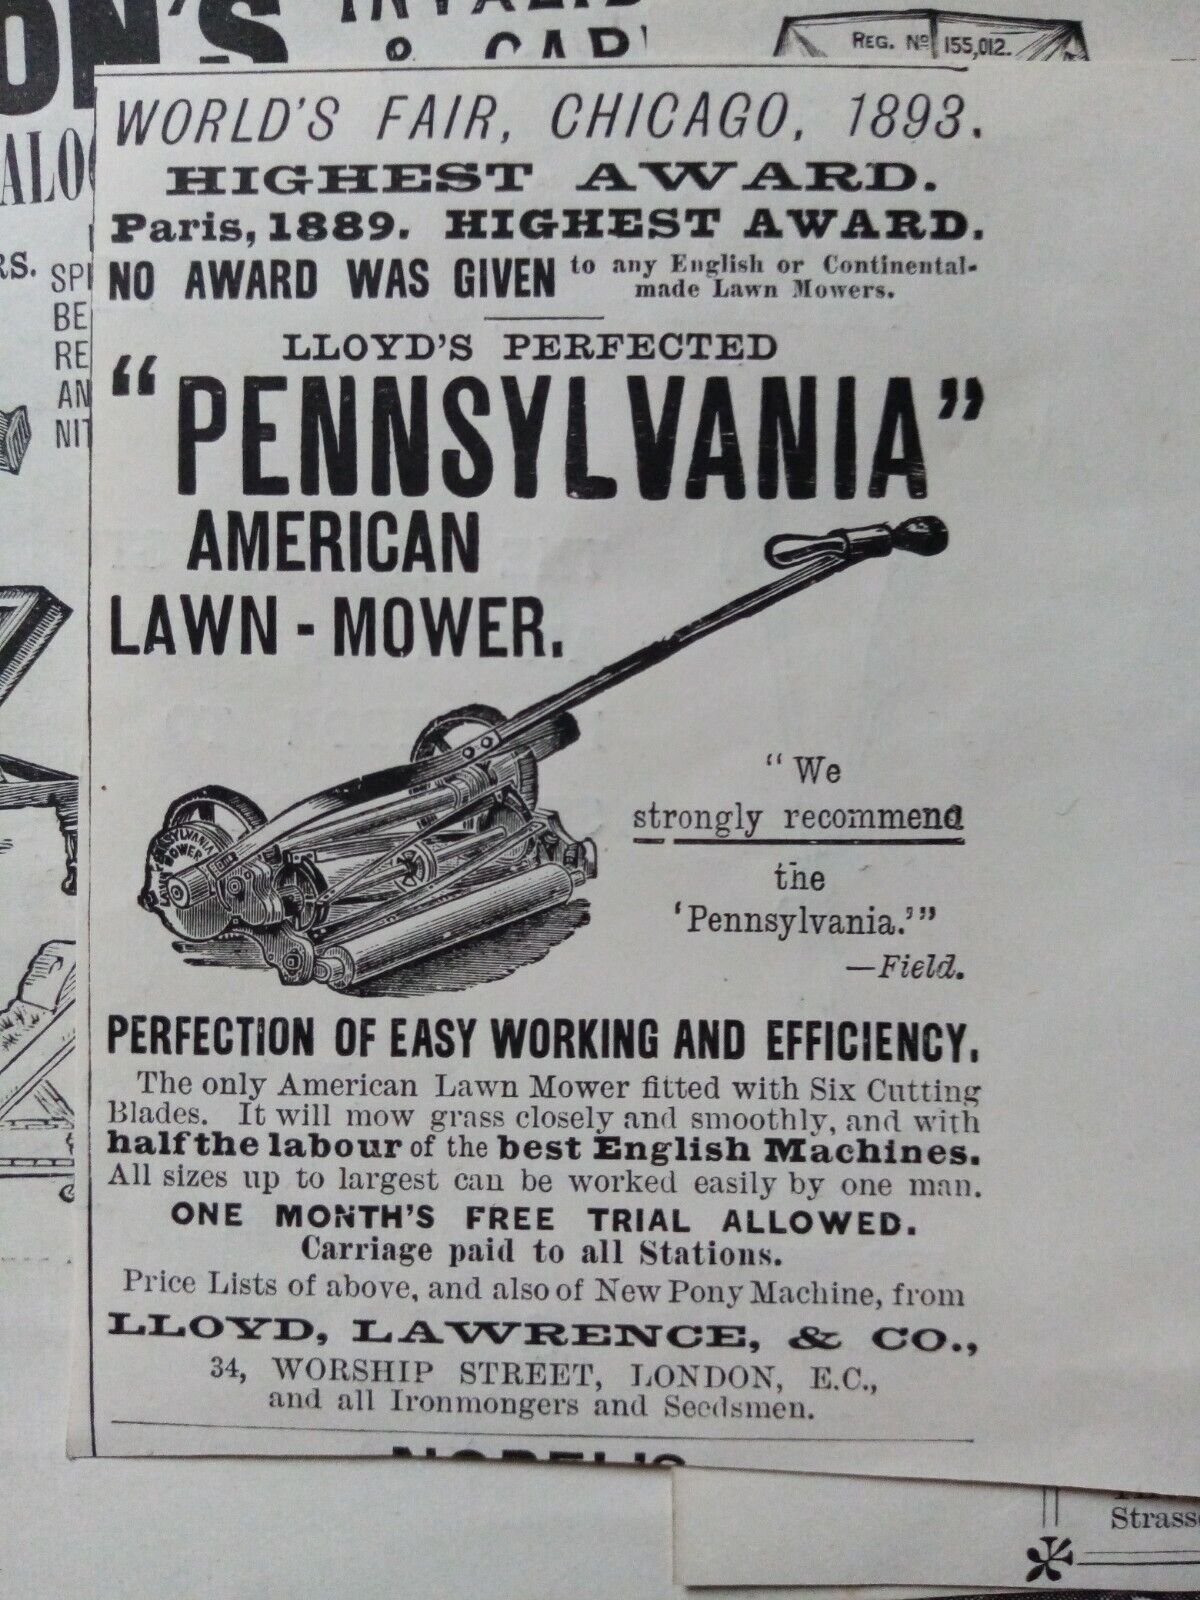 Kvc25 Ephemera 1895 advert pennsylvania American lawn mower 